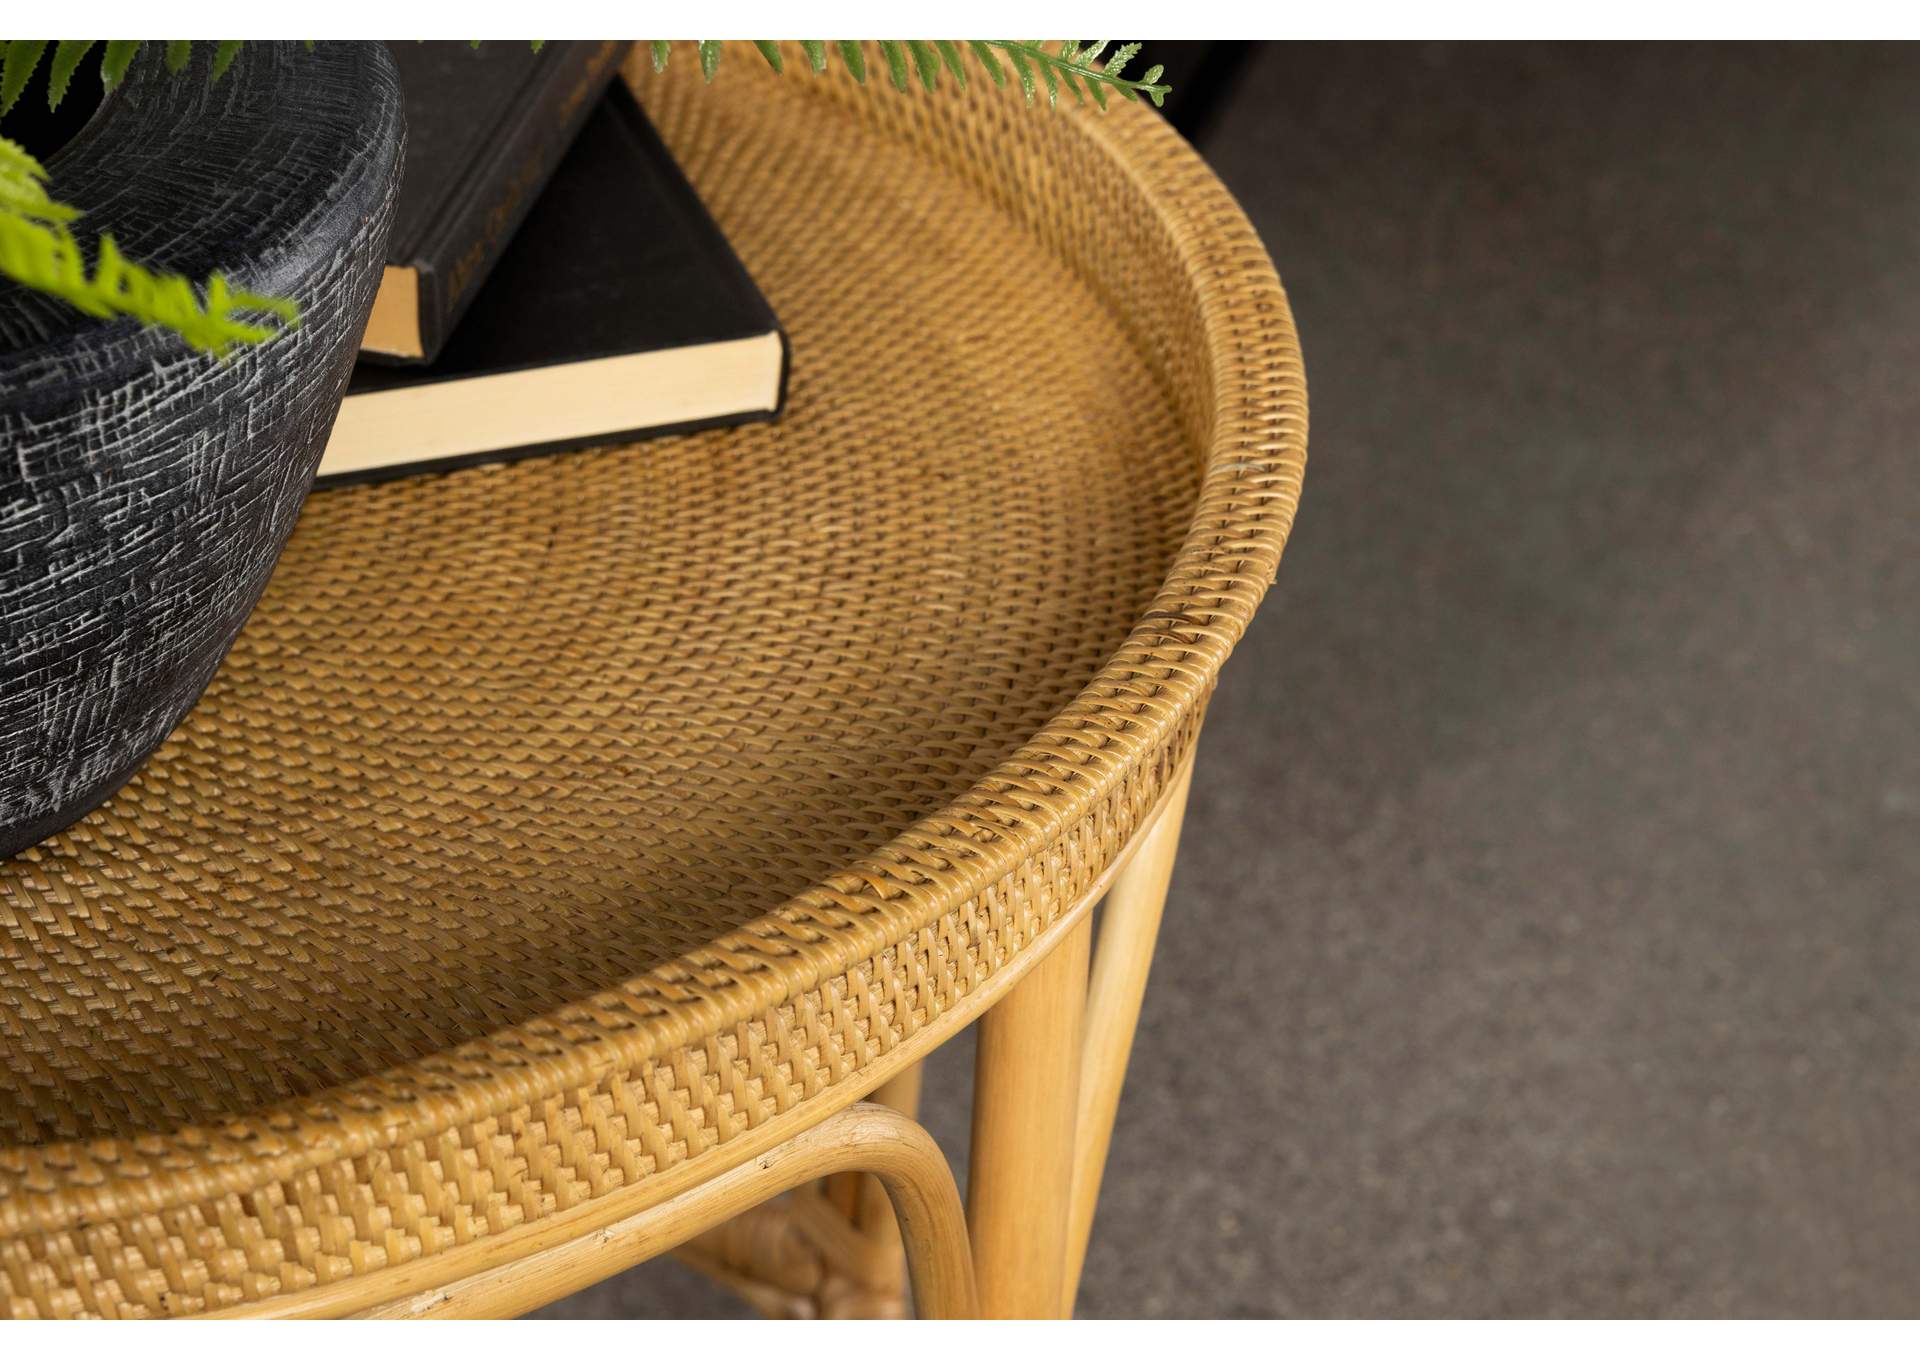 Antonio Round Rattan Tray Top Accent Table Natural,Coaster Furniture